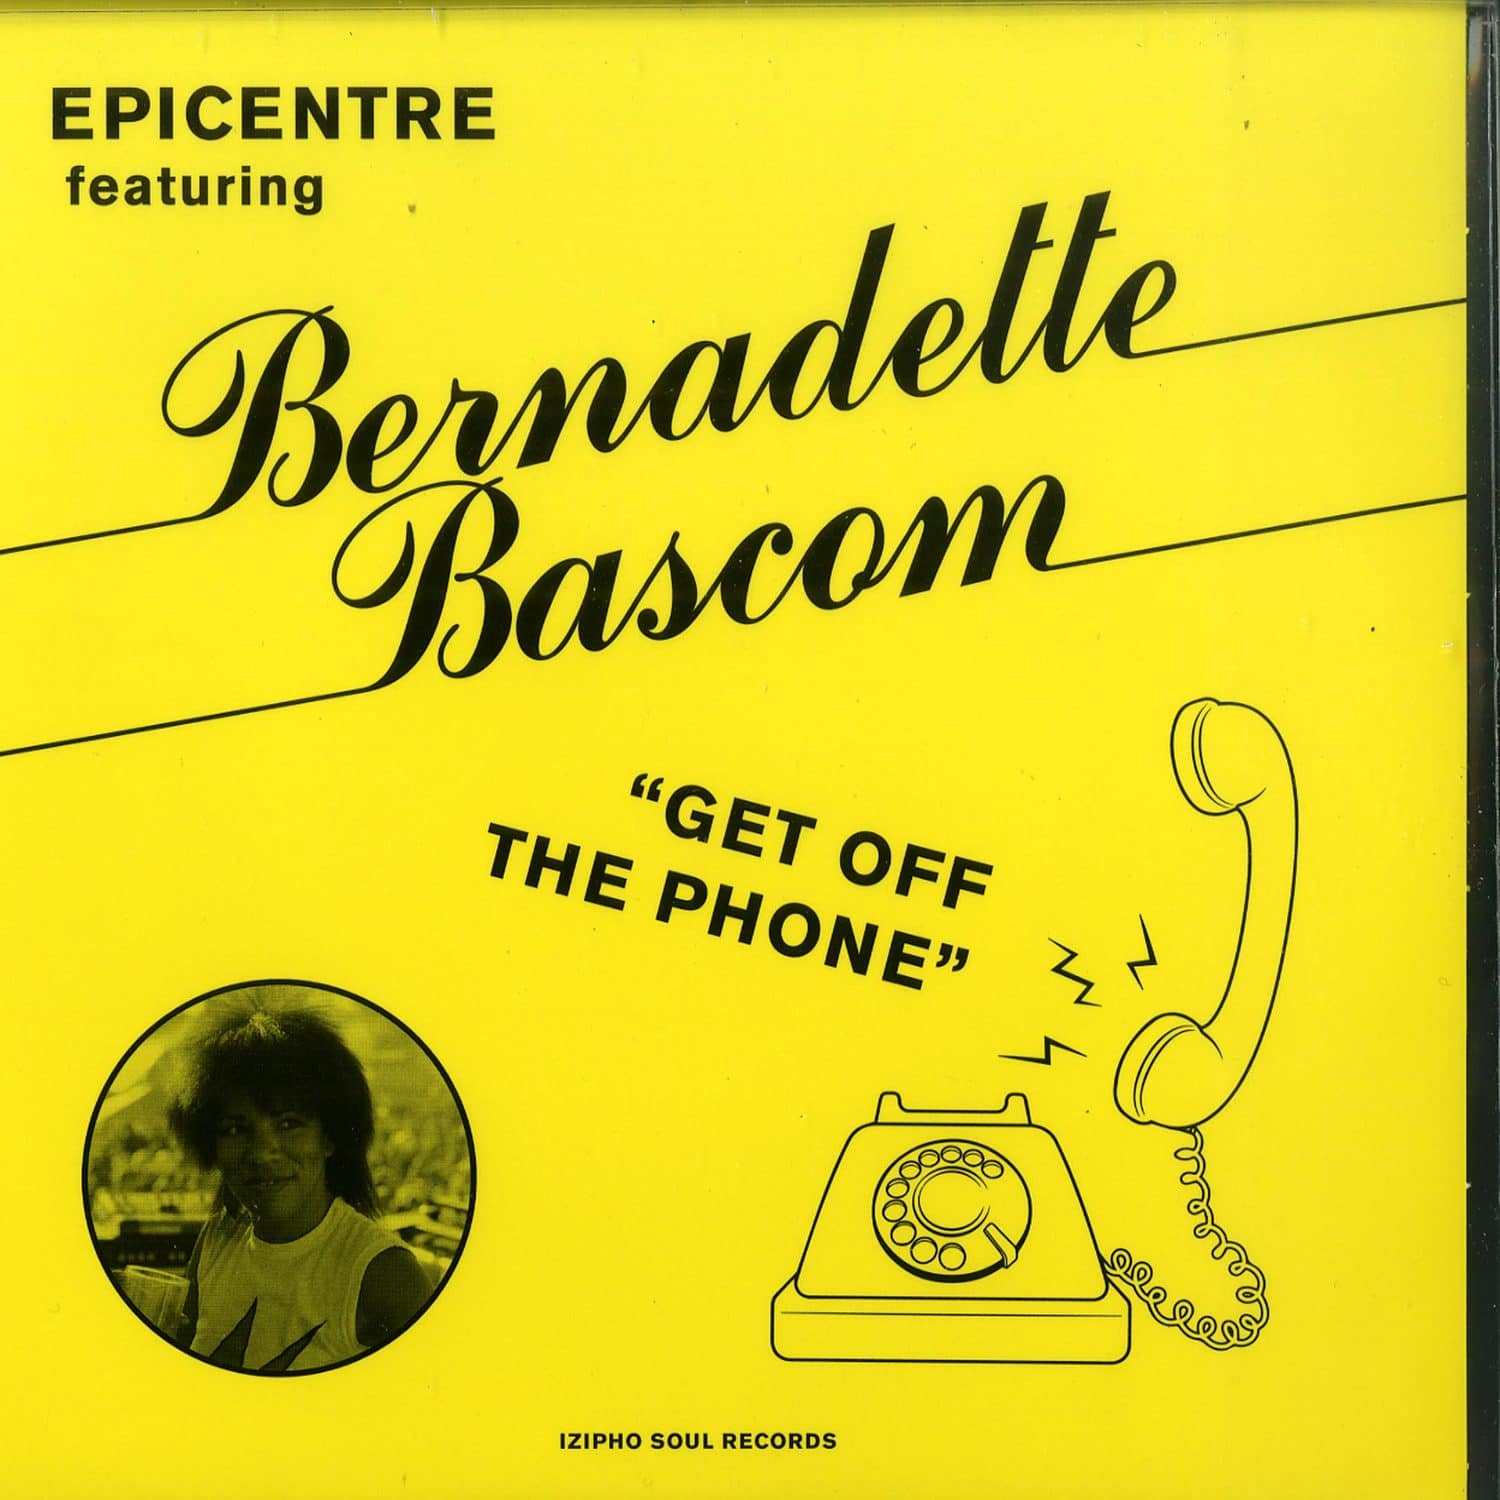 Epicentre ft. Bernadette Bascom - GET OFF THE PHONE 